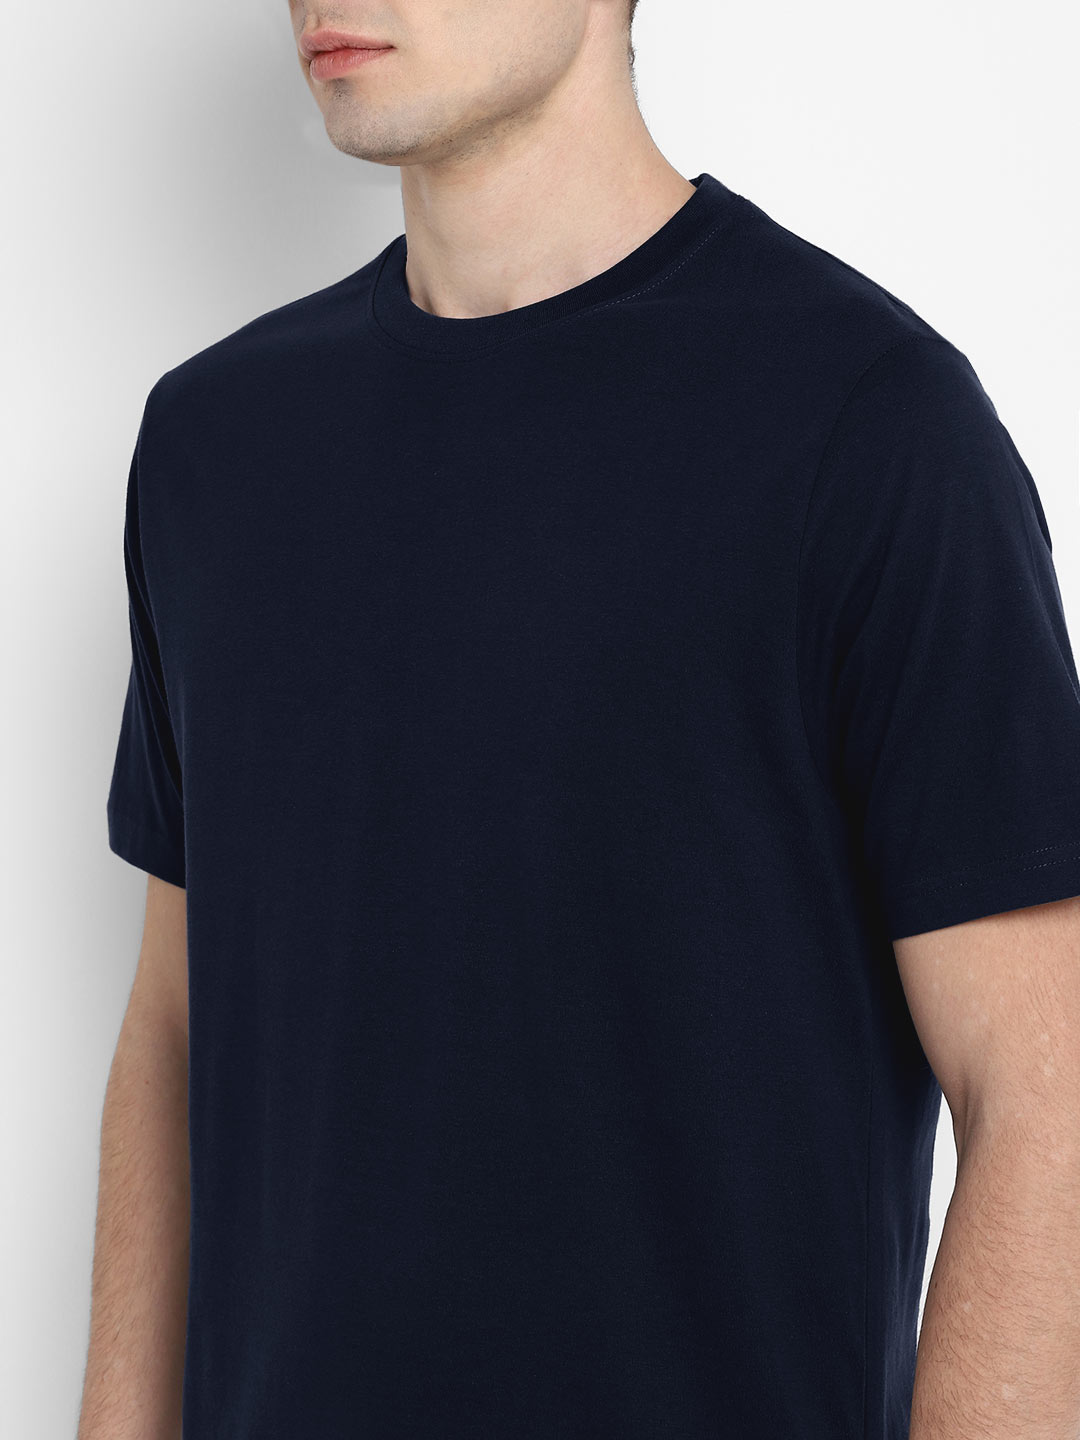 Supima Cotton Round Neck T-Shirt for Men - Navy Blue